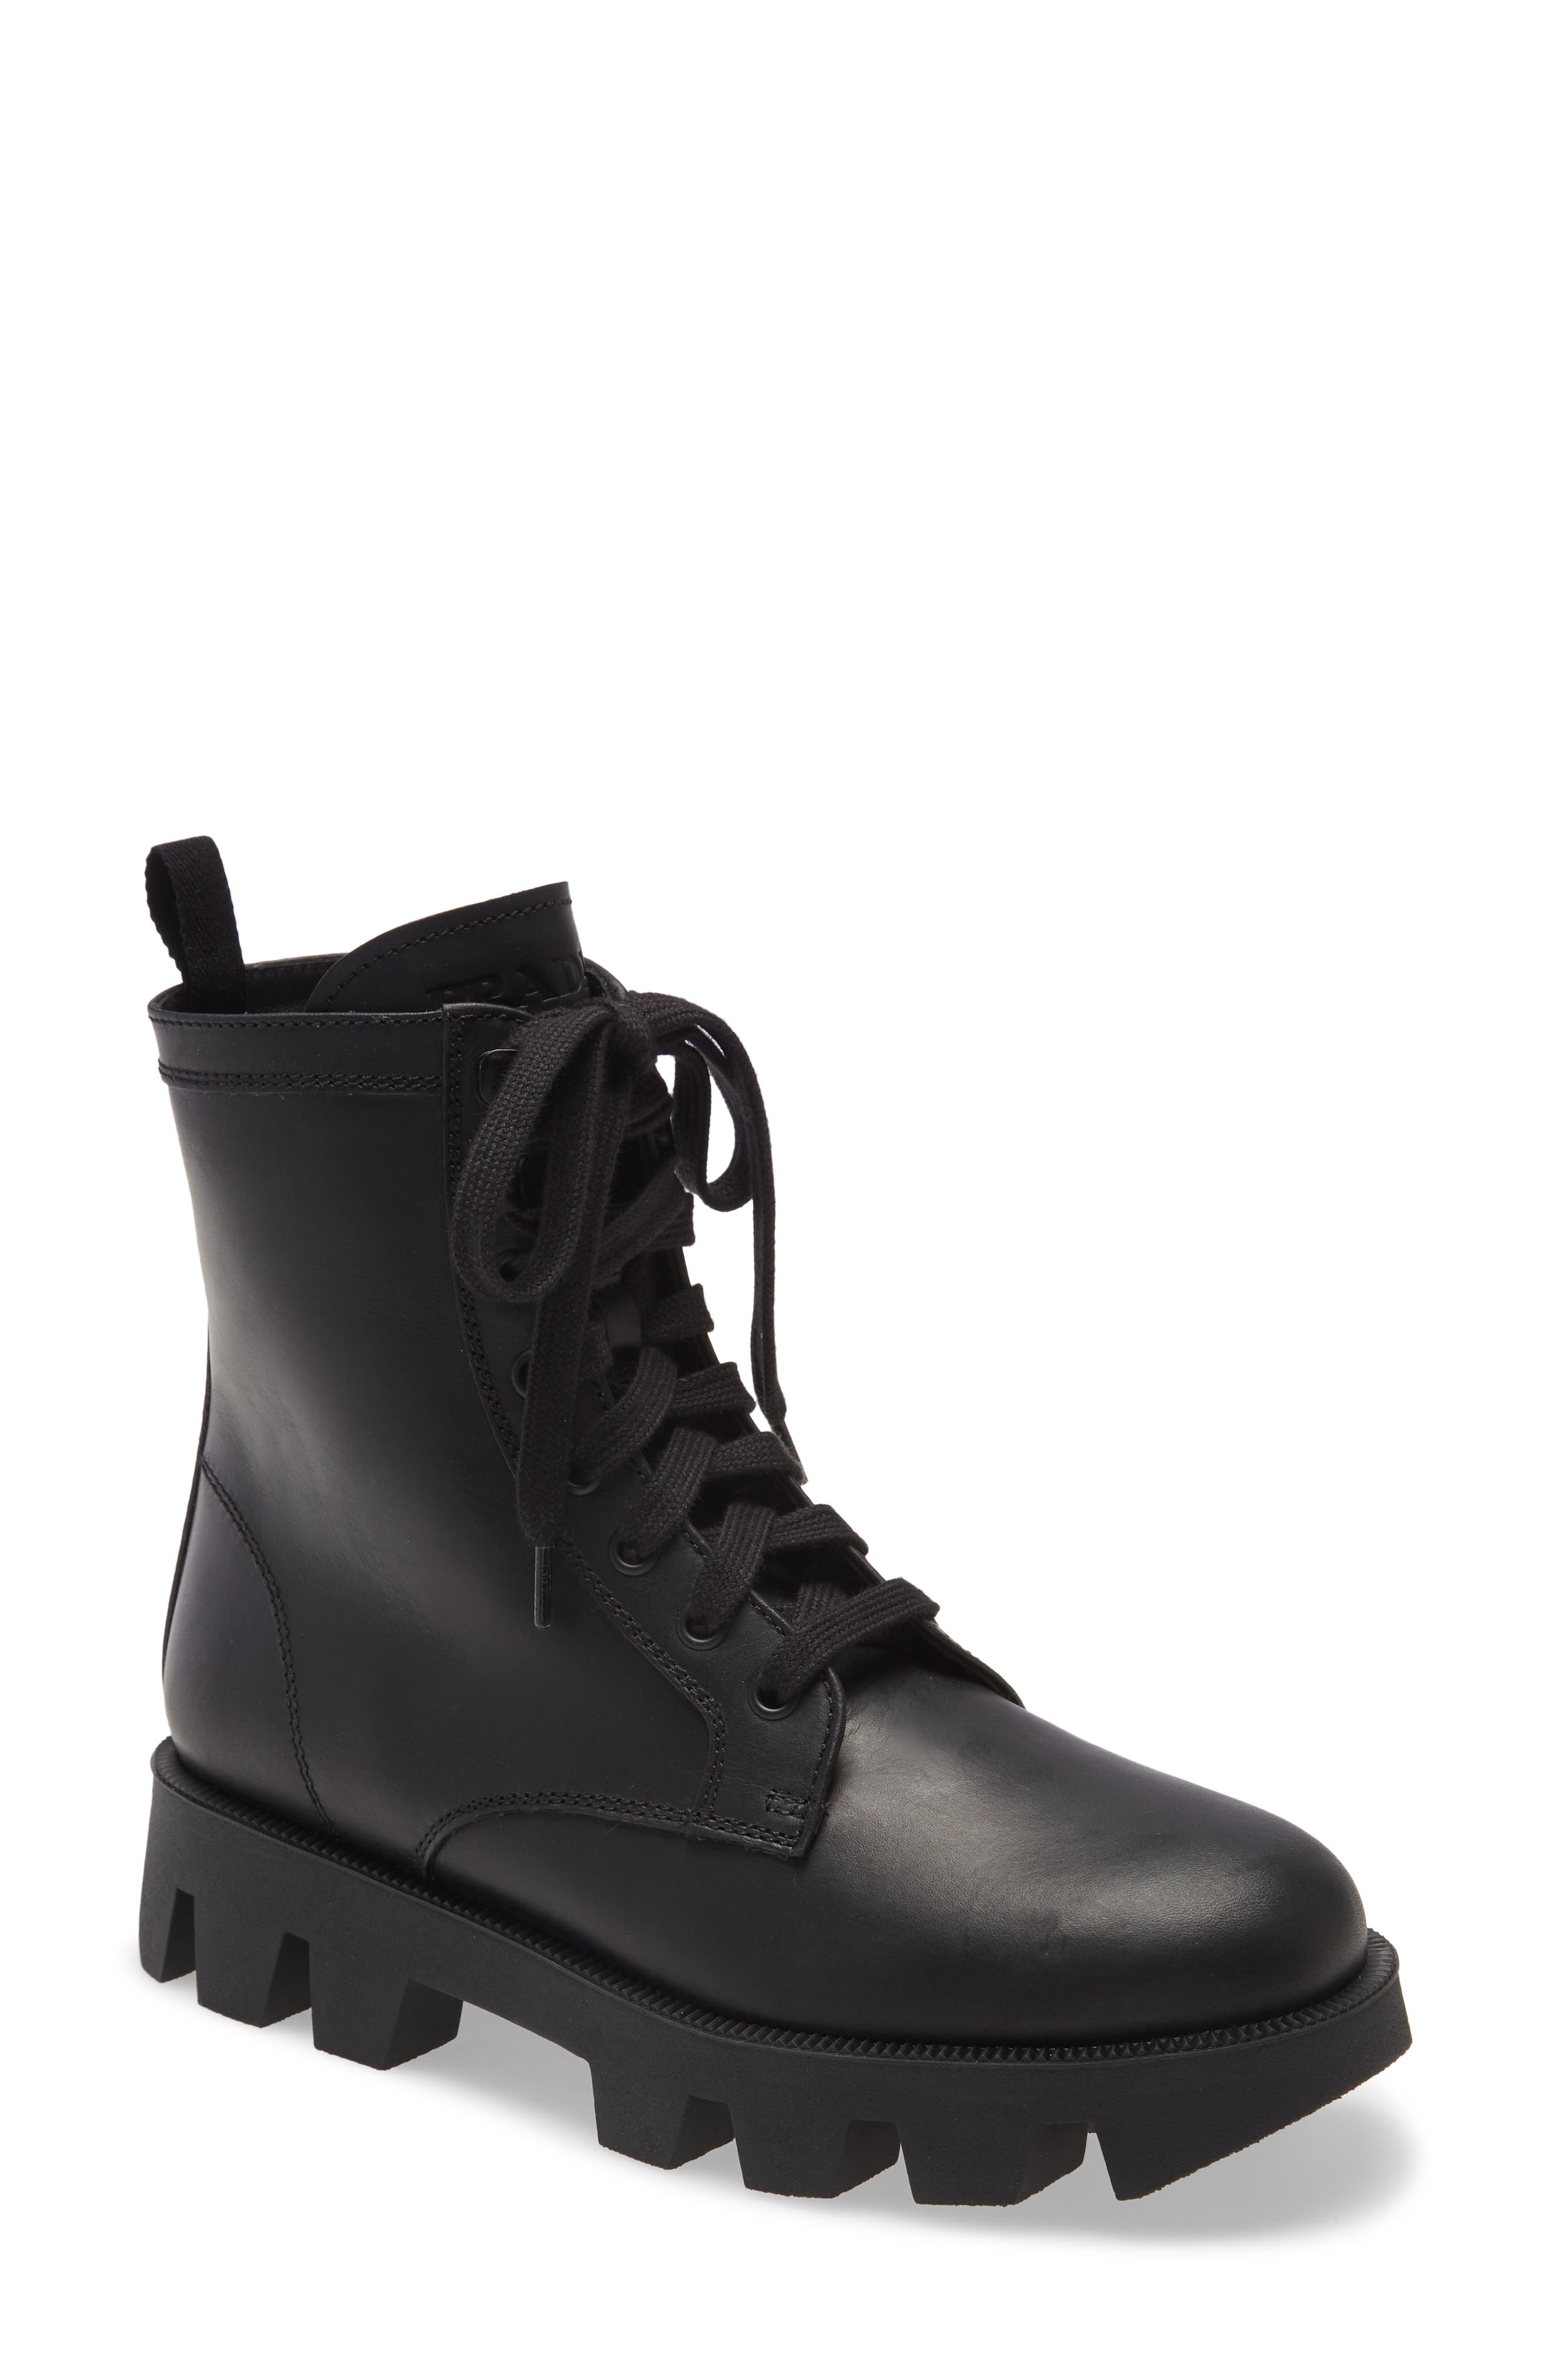 prada black aftershave boots